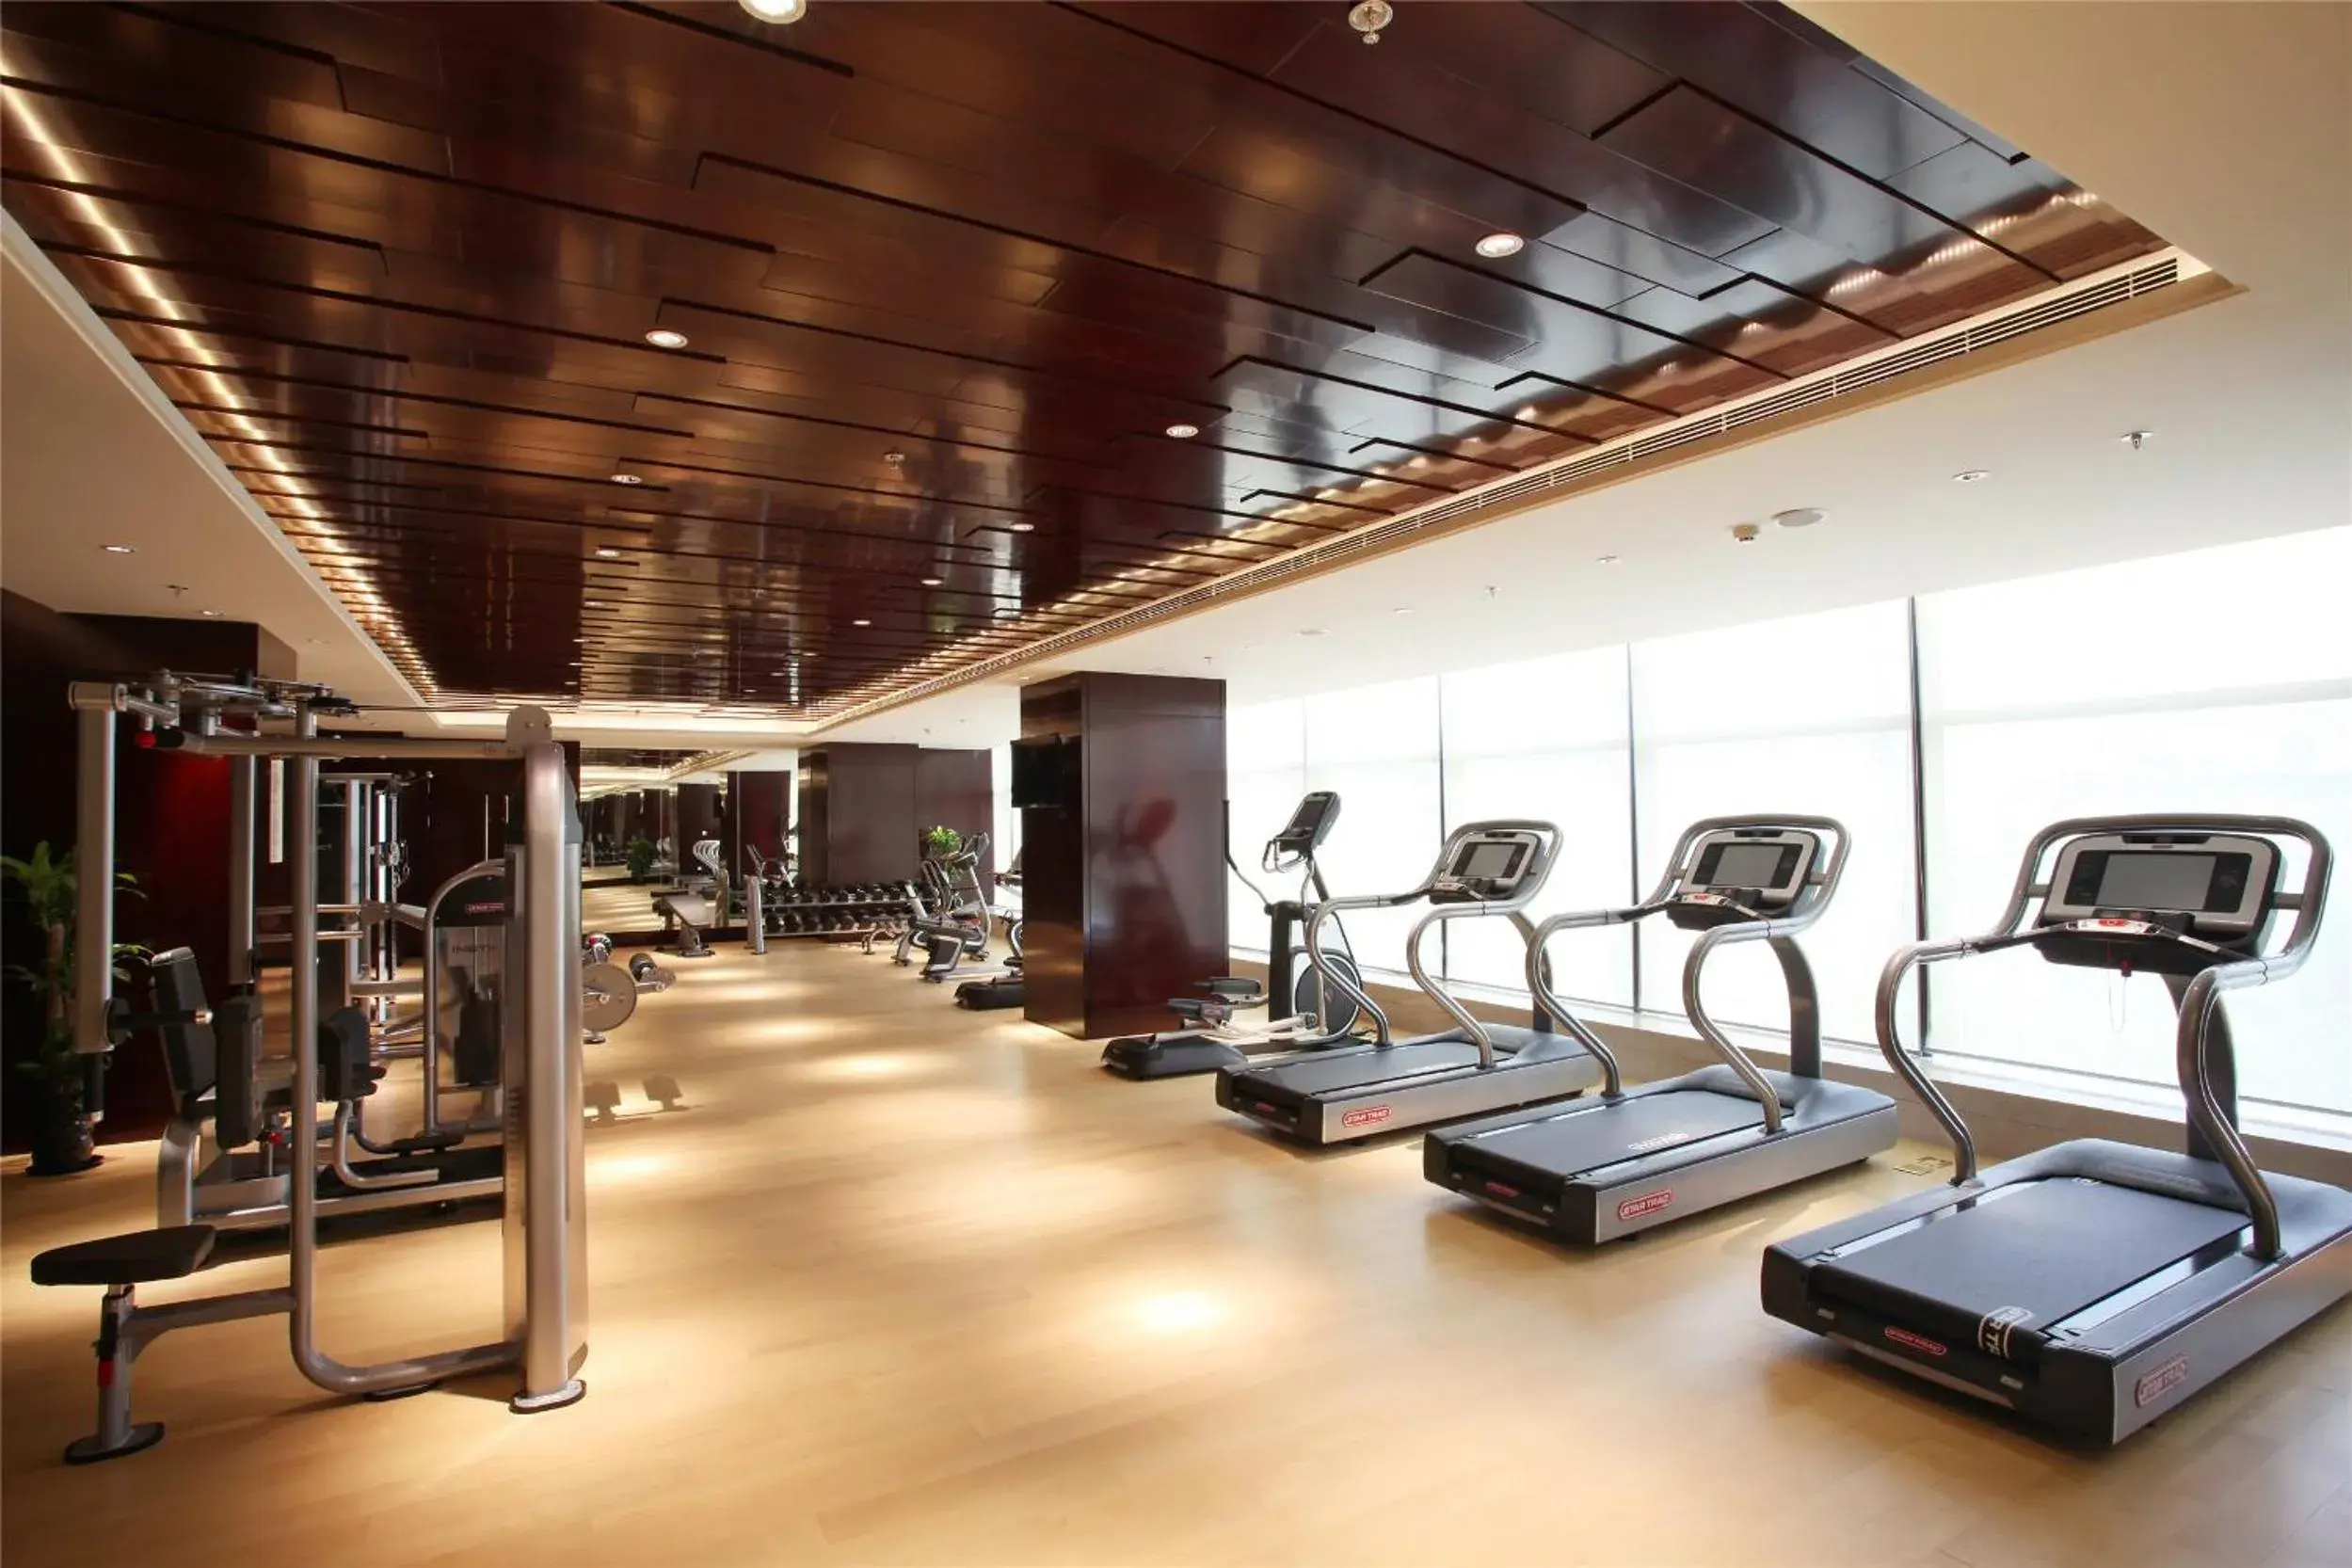 Fitness centre/facilities, Fitness Center/Facilities in Grand Barony Xi'an